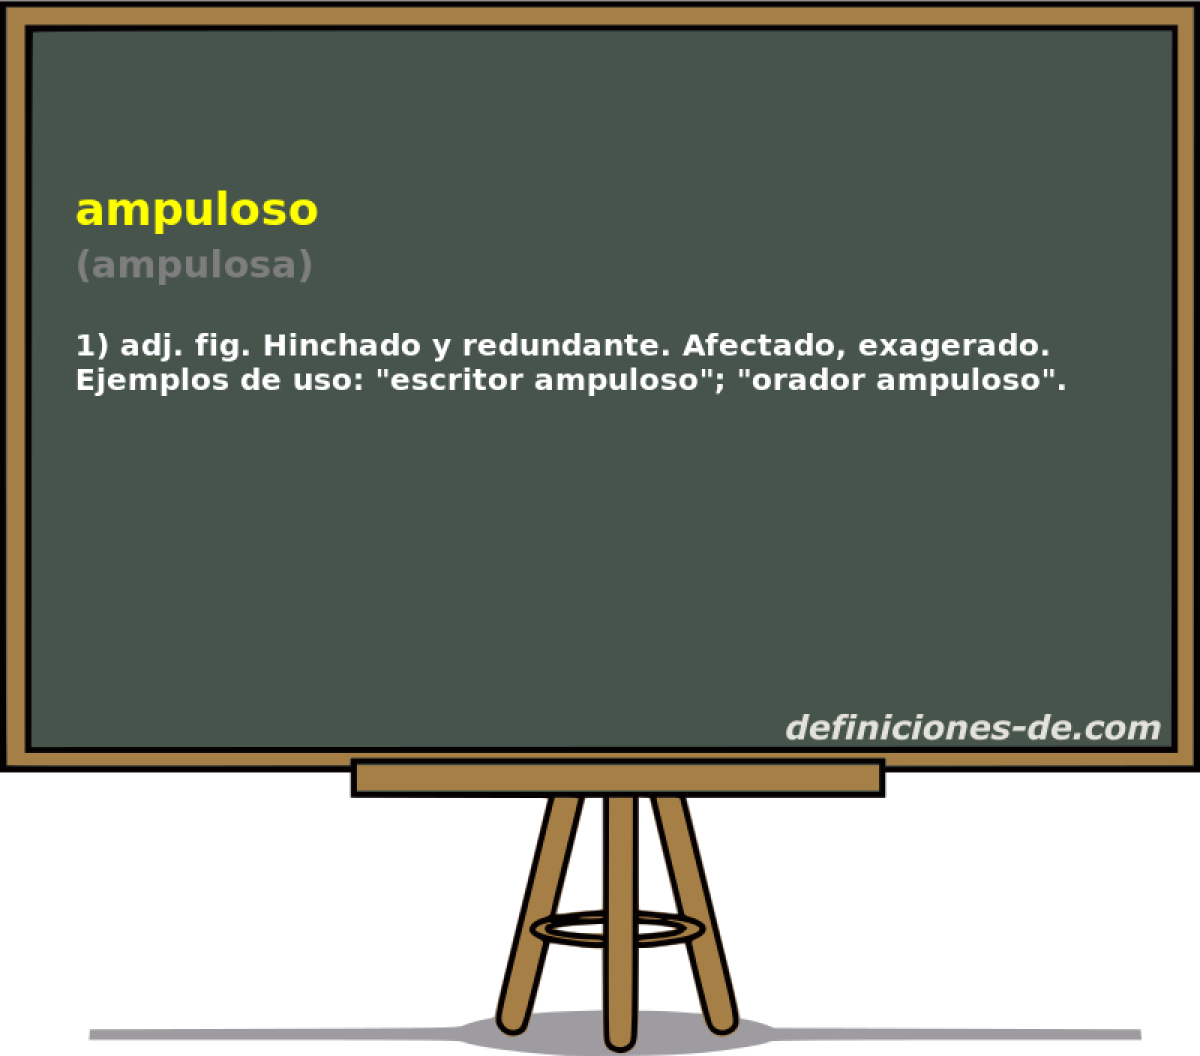 ampuloso (ampulosa)